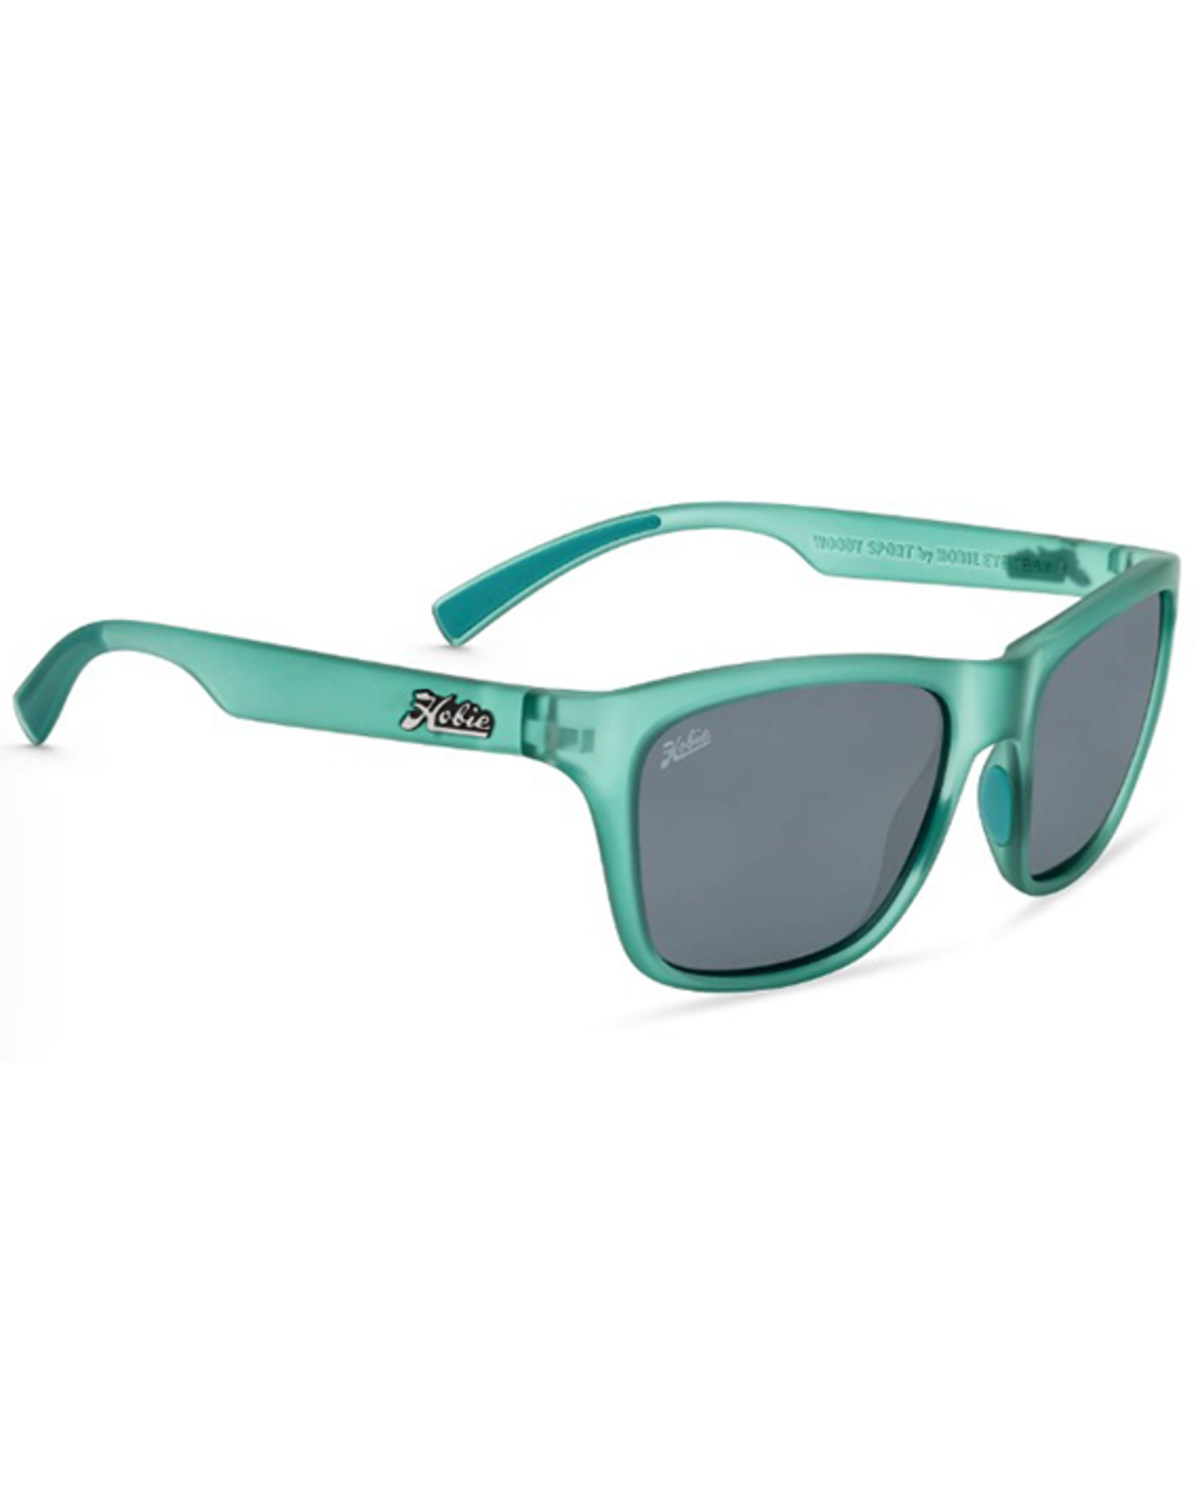 Hobie Woody Sport Sunglasses